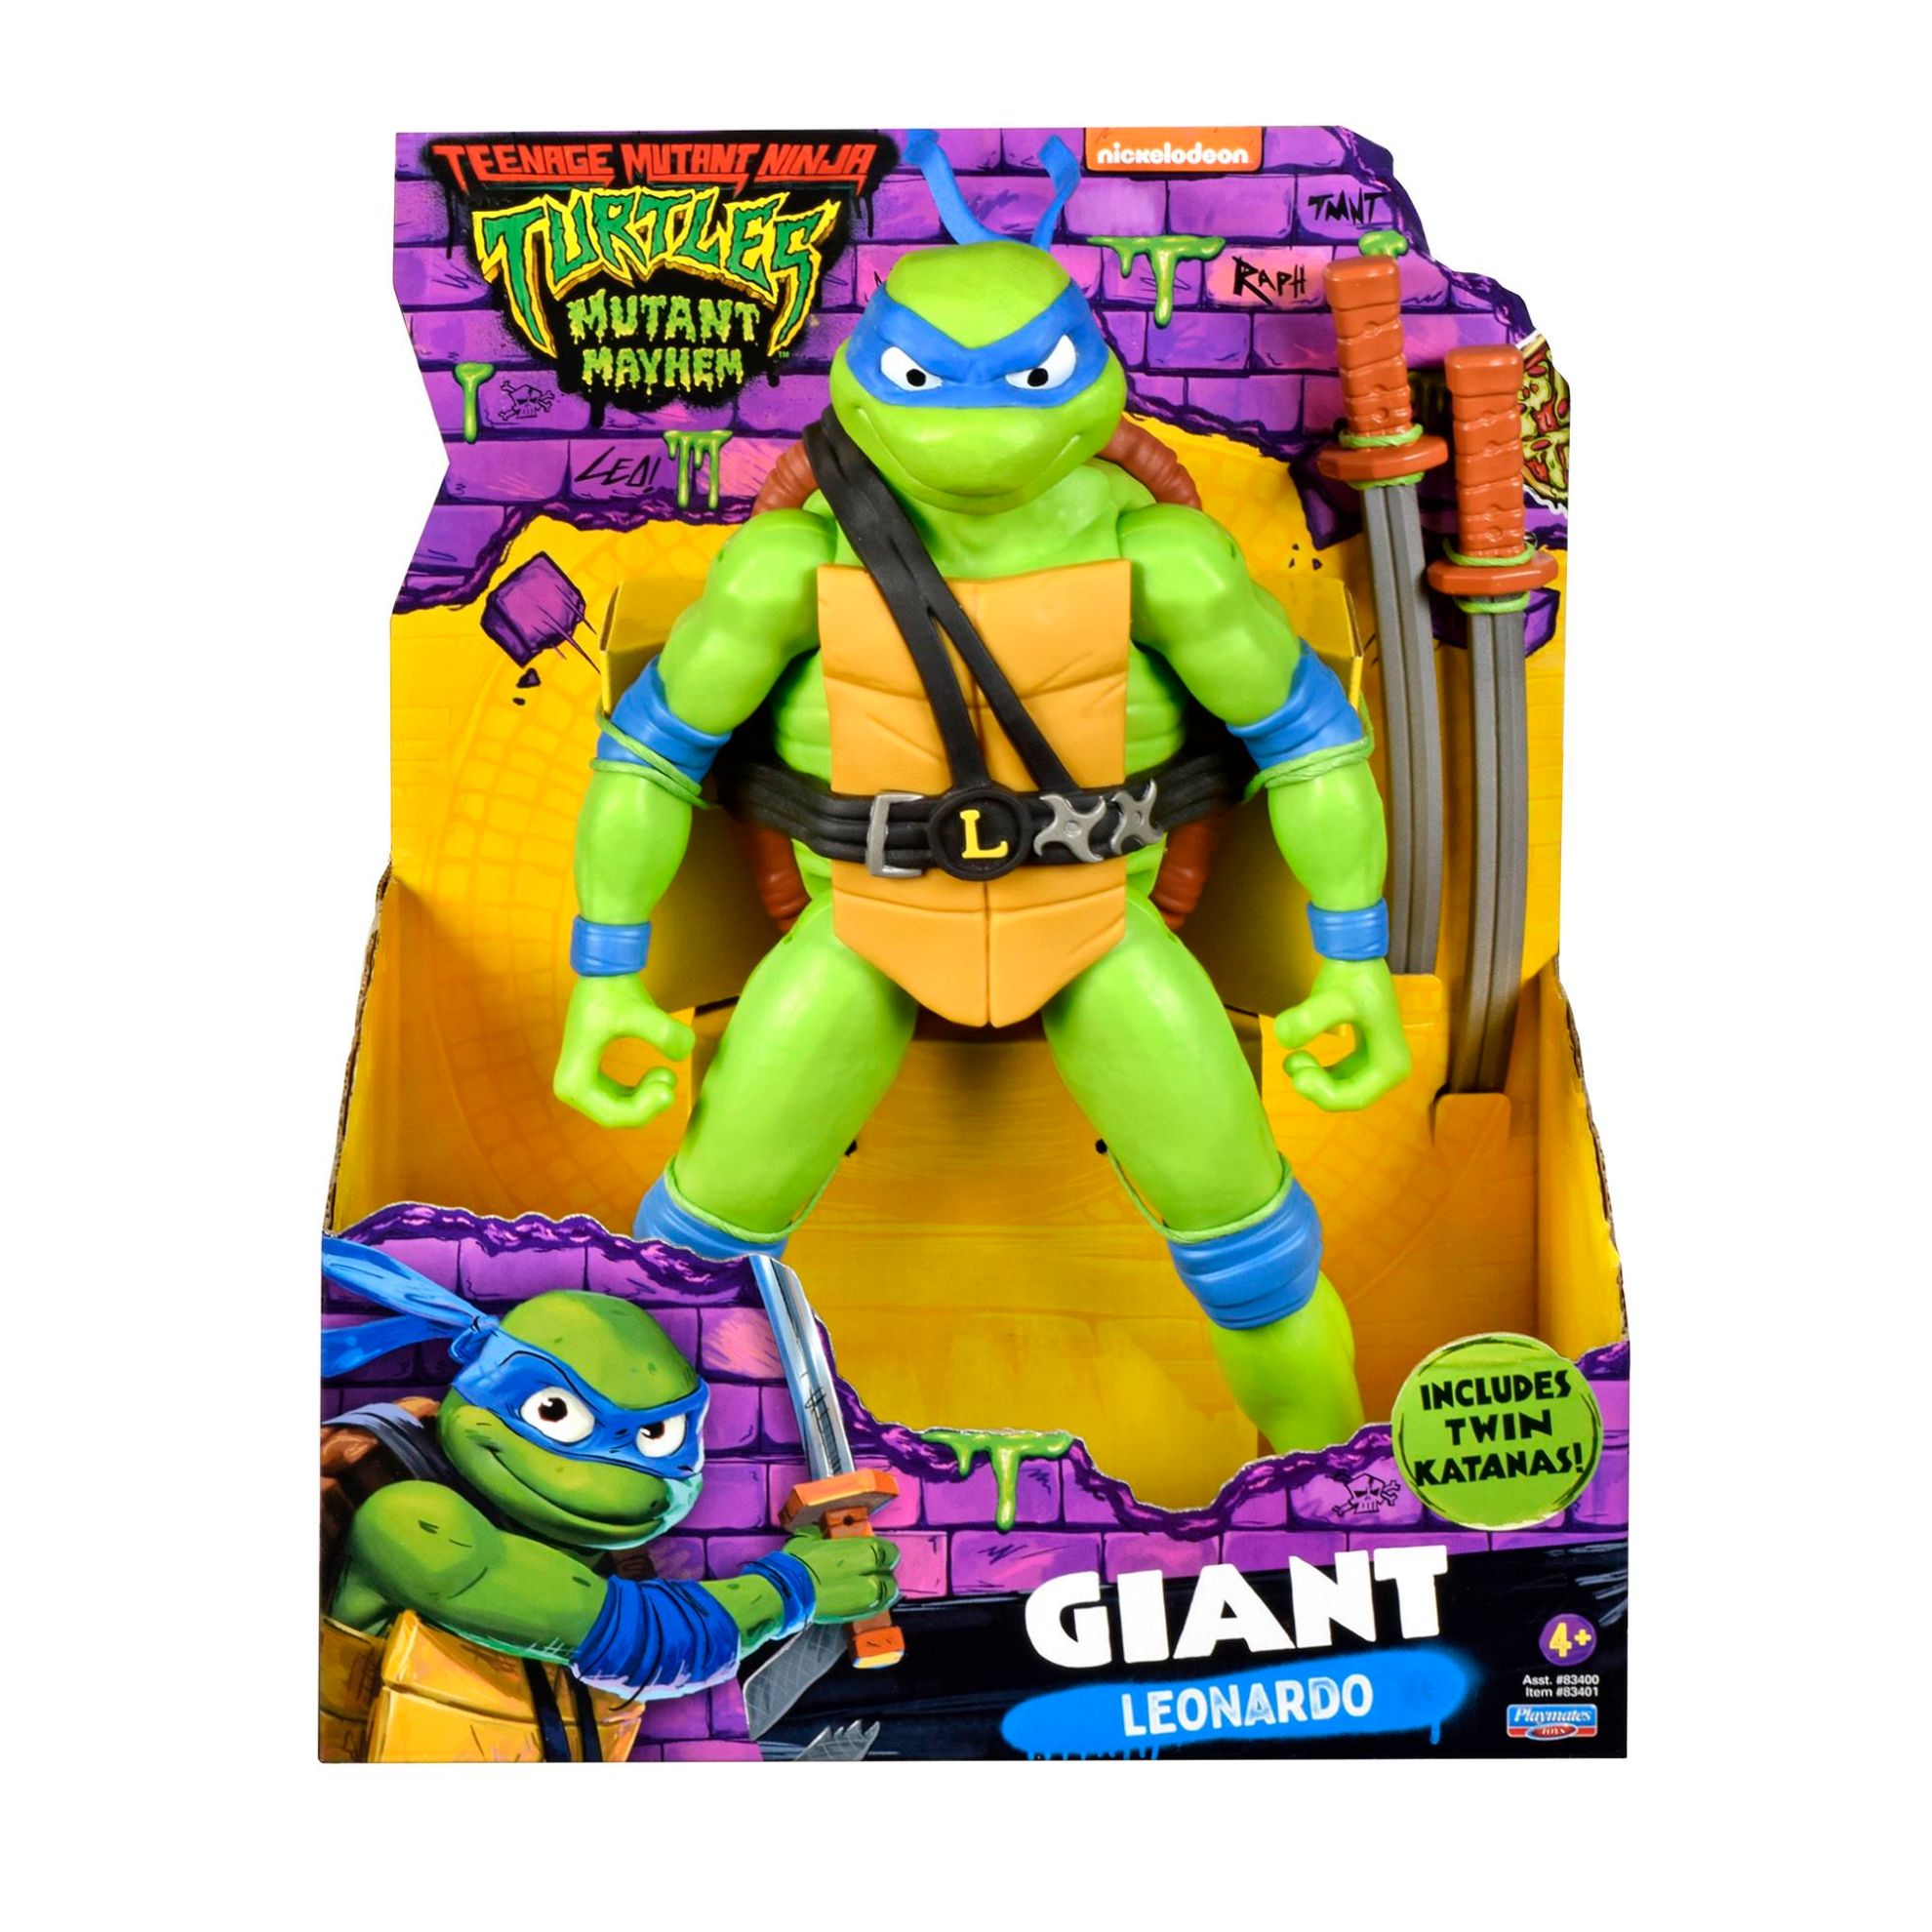 https://www.character-online.com/images/thumbs/0019398_teenage-mutant-ninja-turtles-movie-giant-leonardo.jpeg